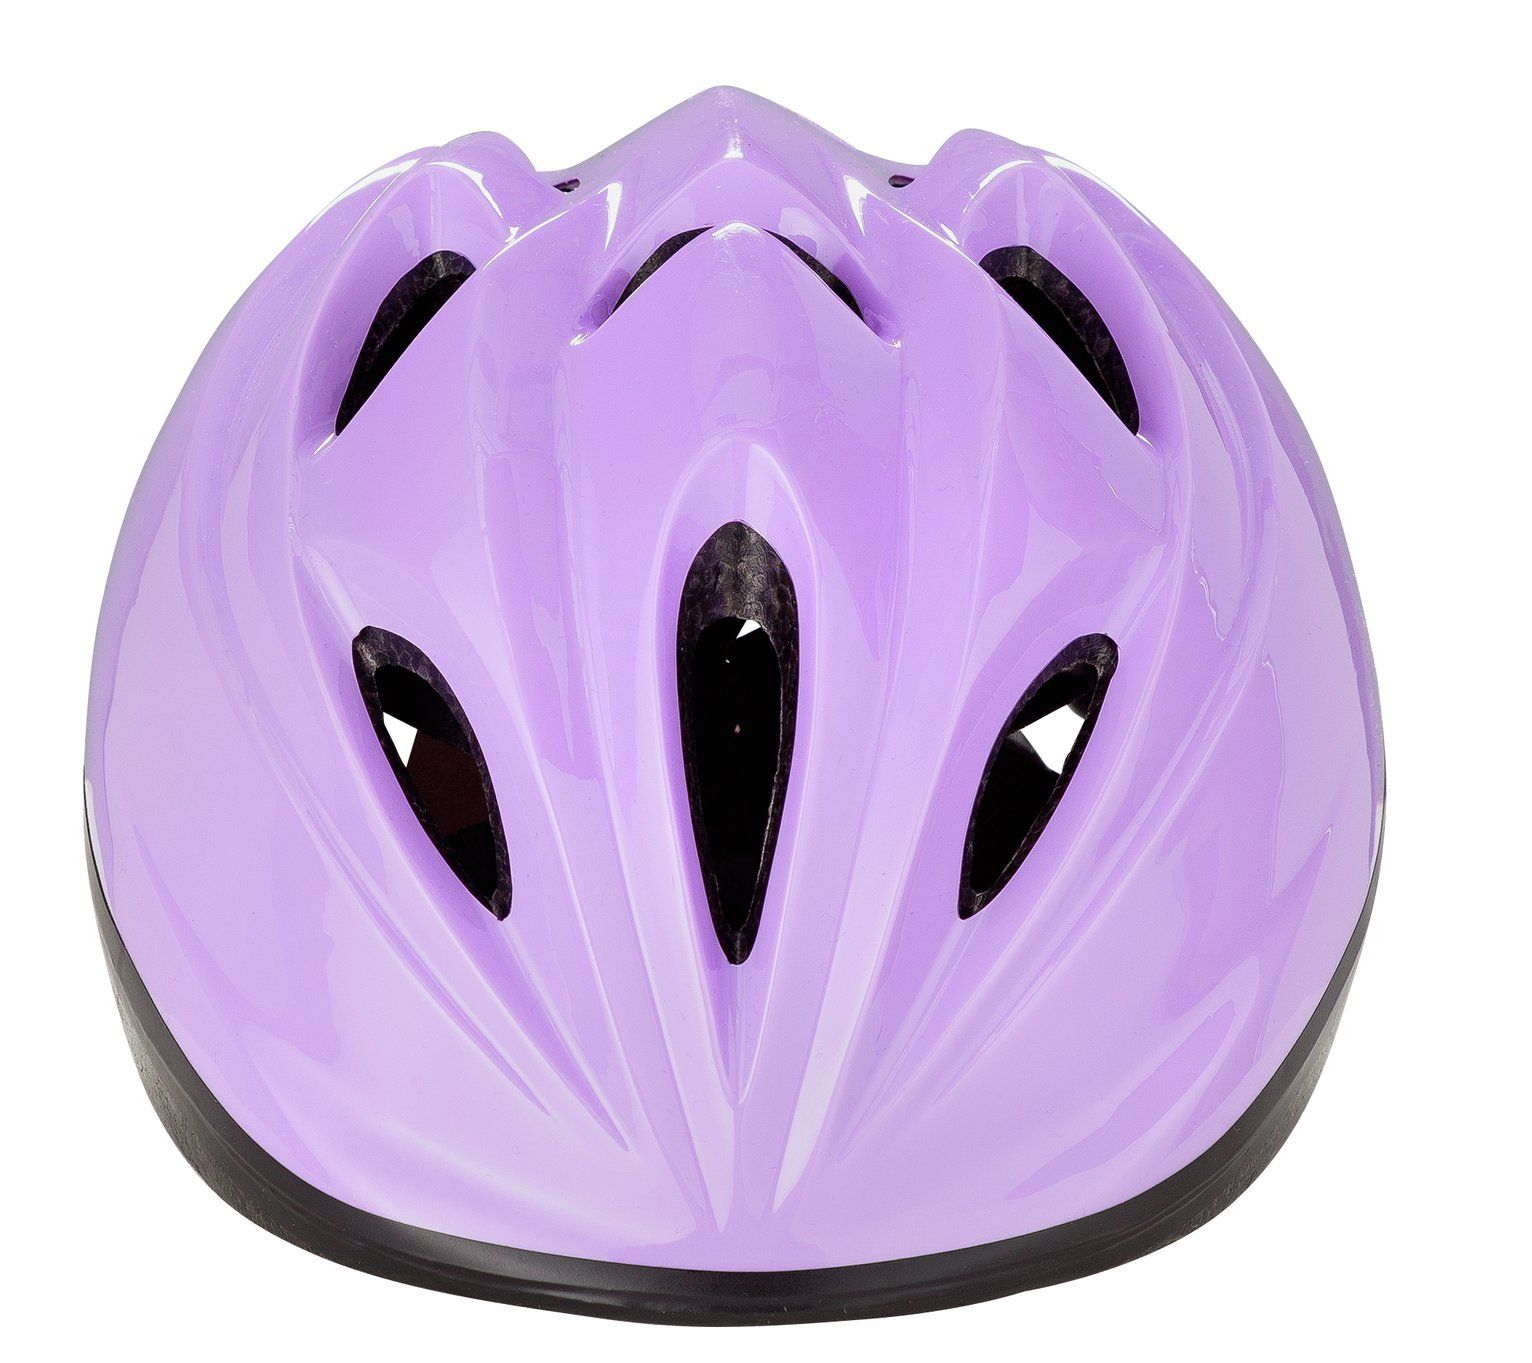 argos childrens cycle helmets